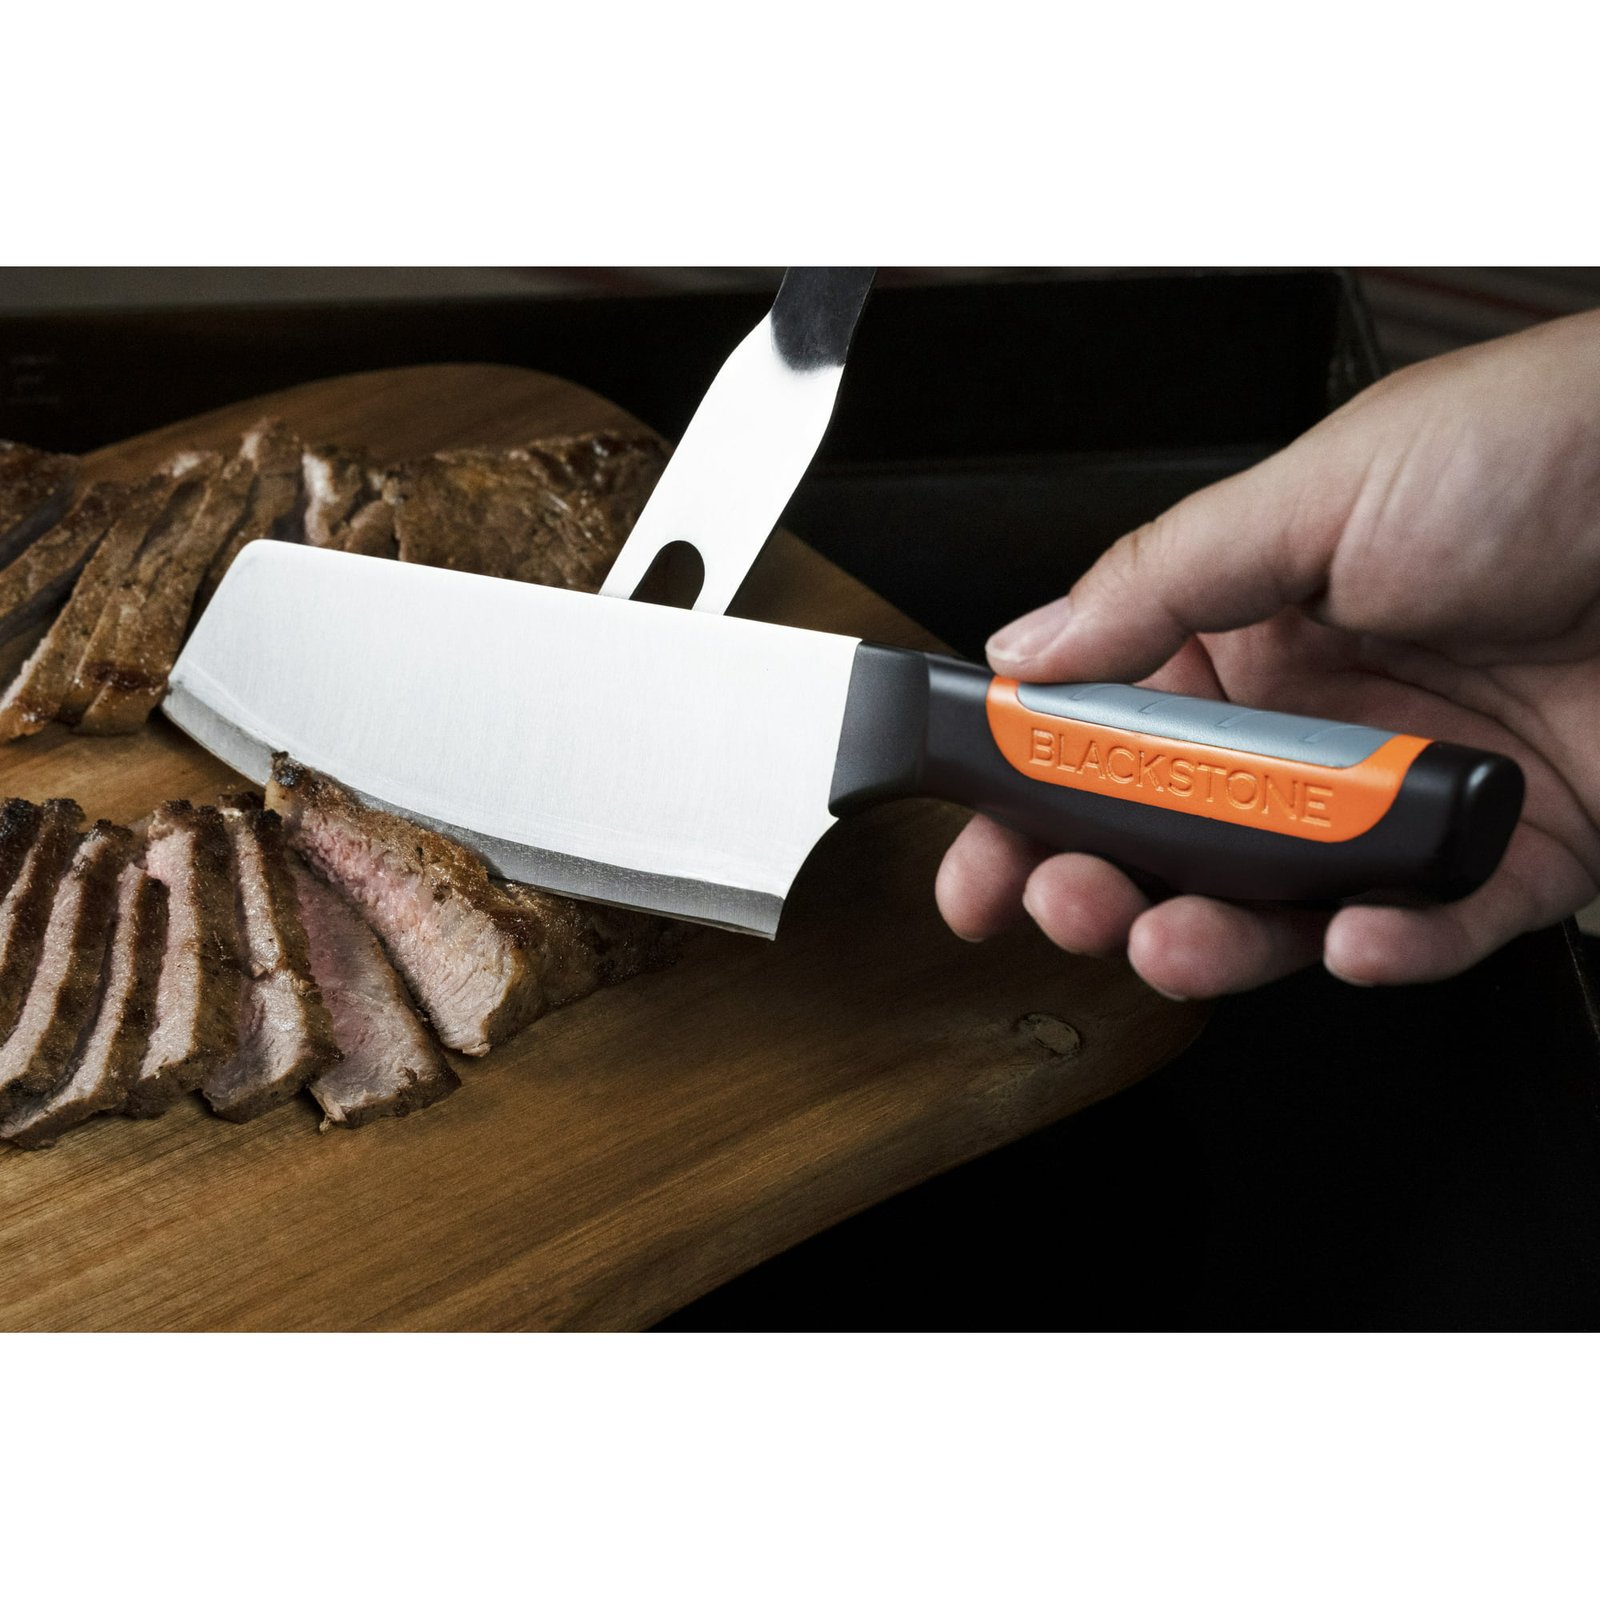 https://themarketdepot.com/wp-content/uploads/2023/01/Blackstone-Signature-Series-7-Stainless-Steel-Chefs-Knife-2.jpeg